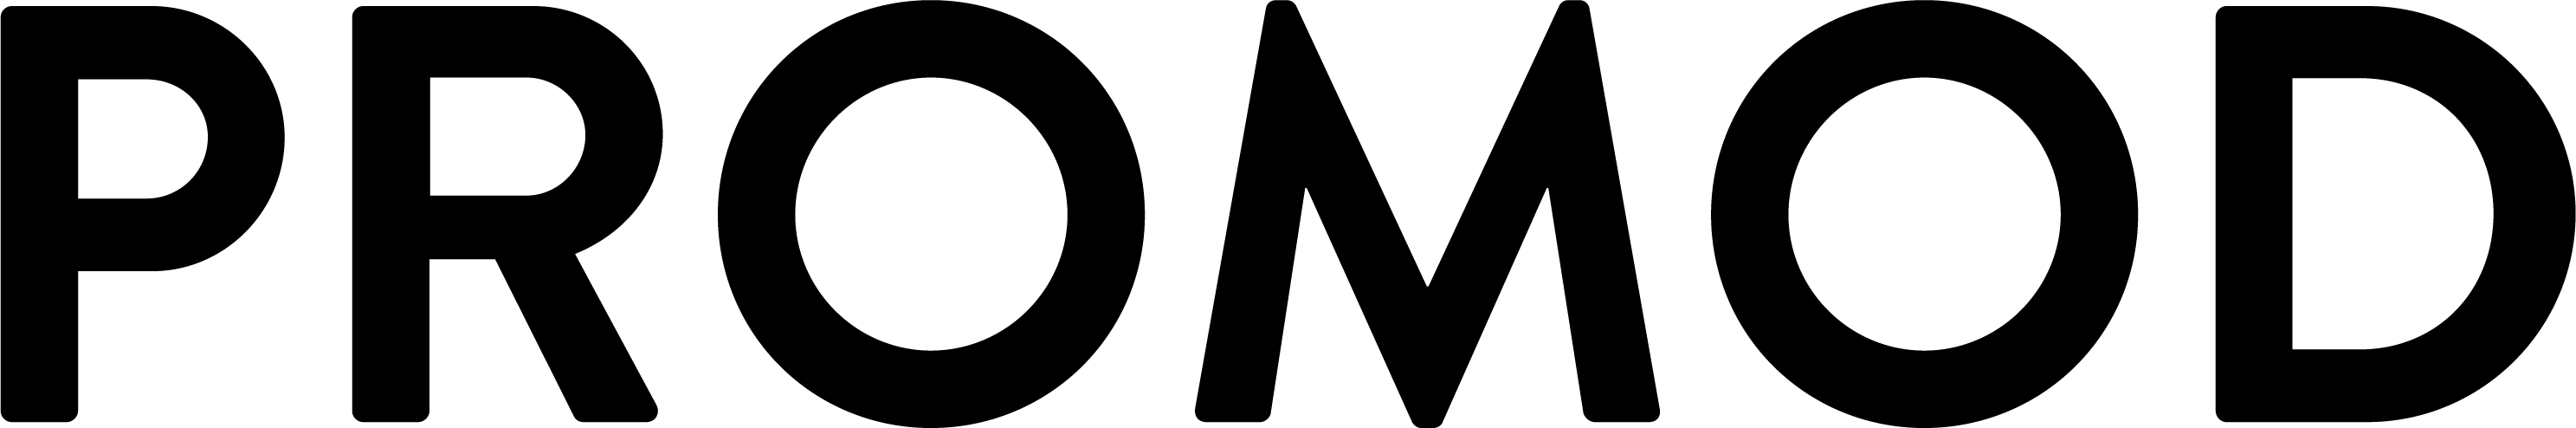 Logo promod noir